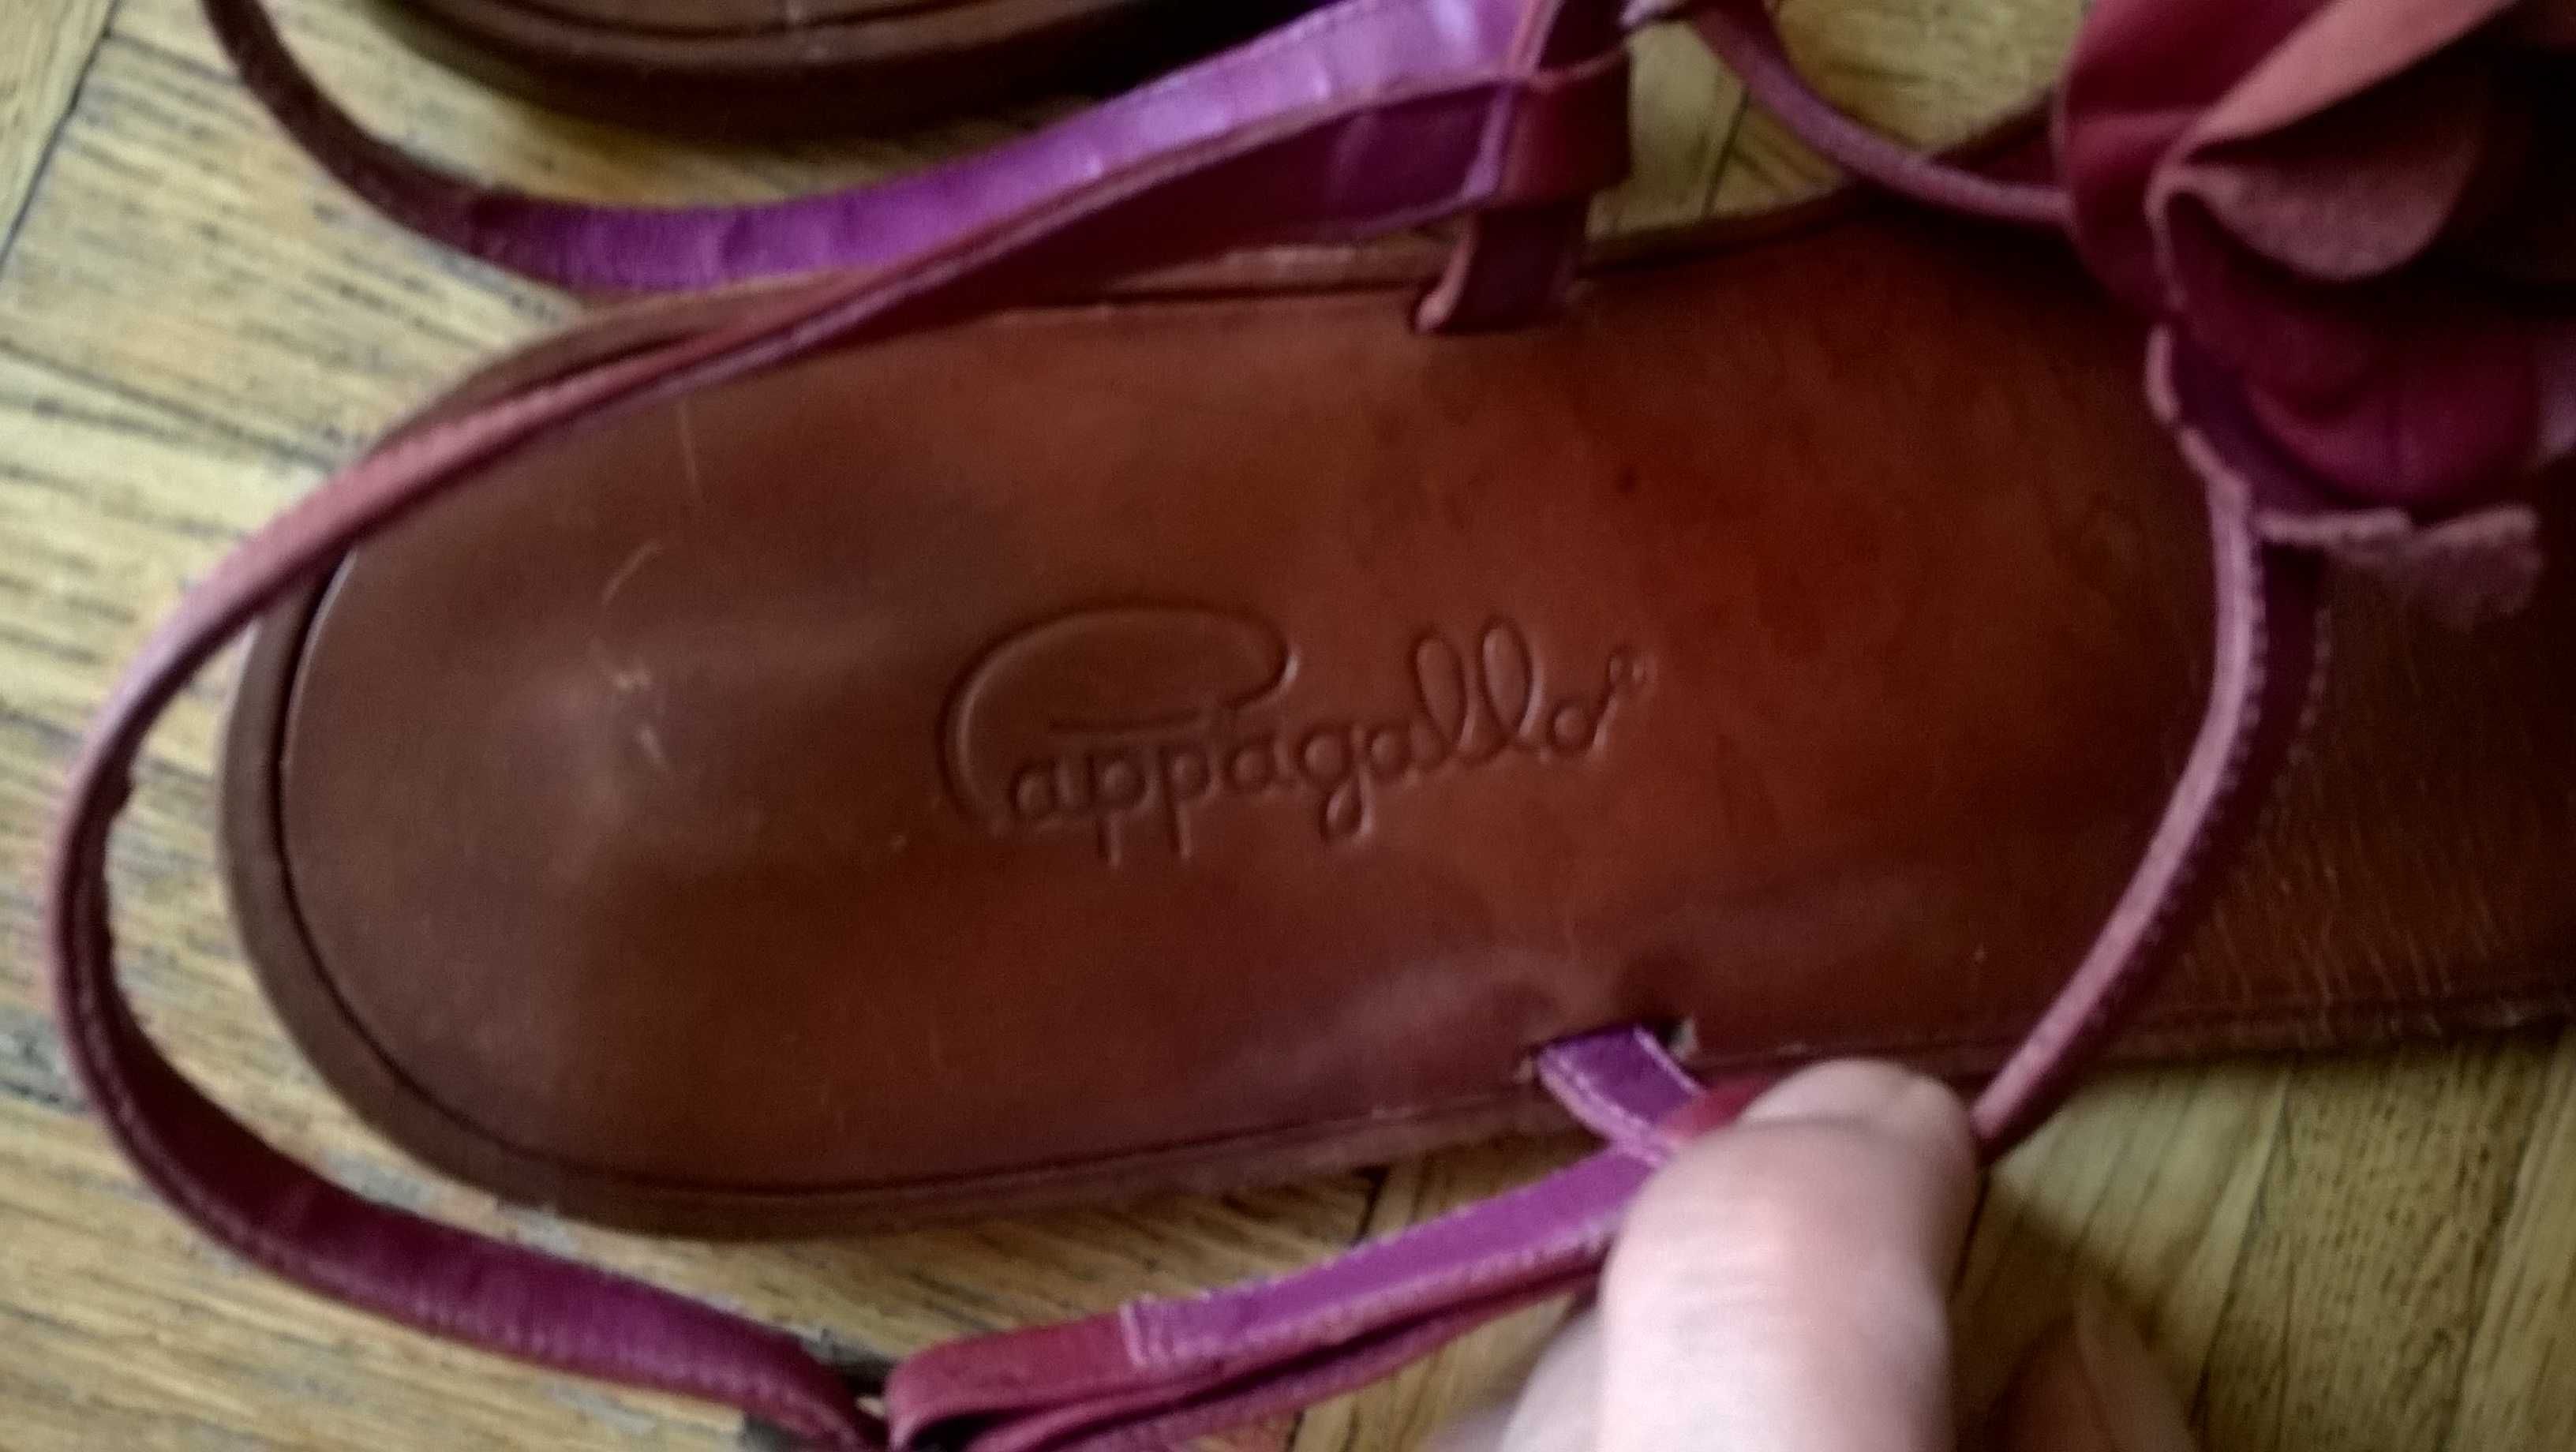 Skórzane sandałki Cappogallo, rozmiar 38